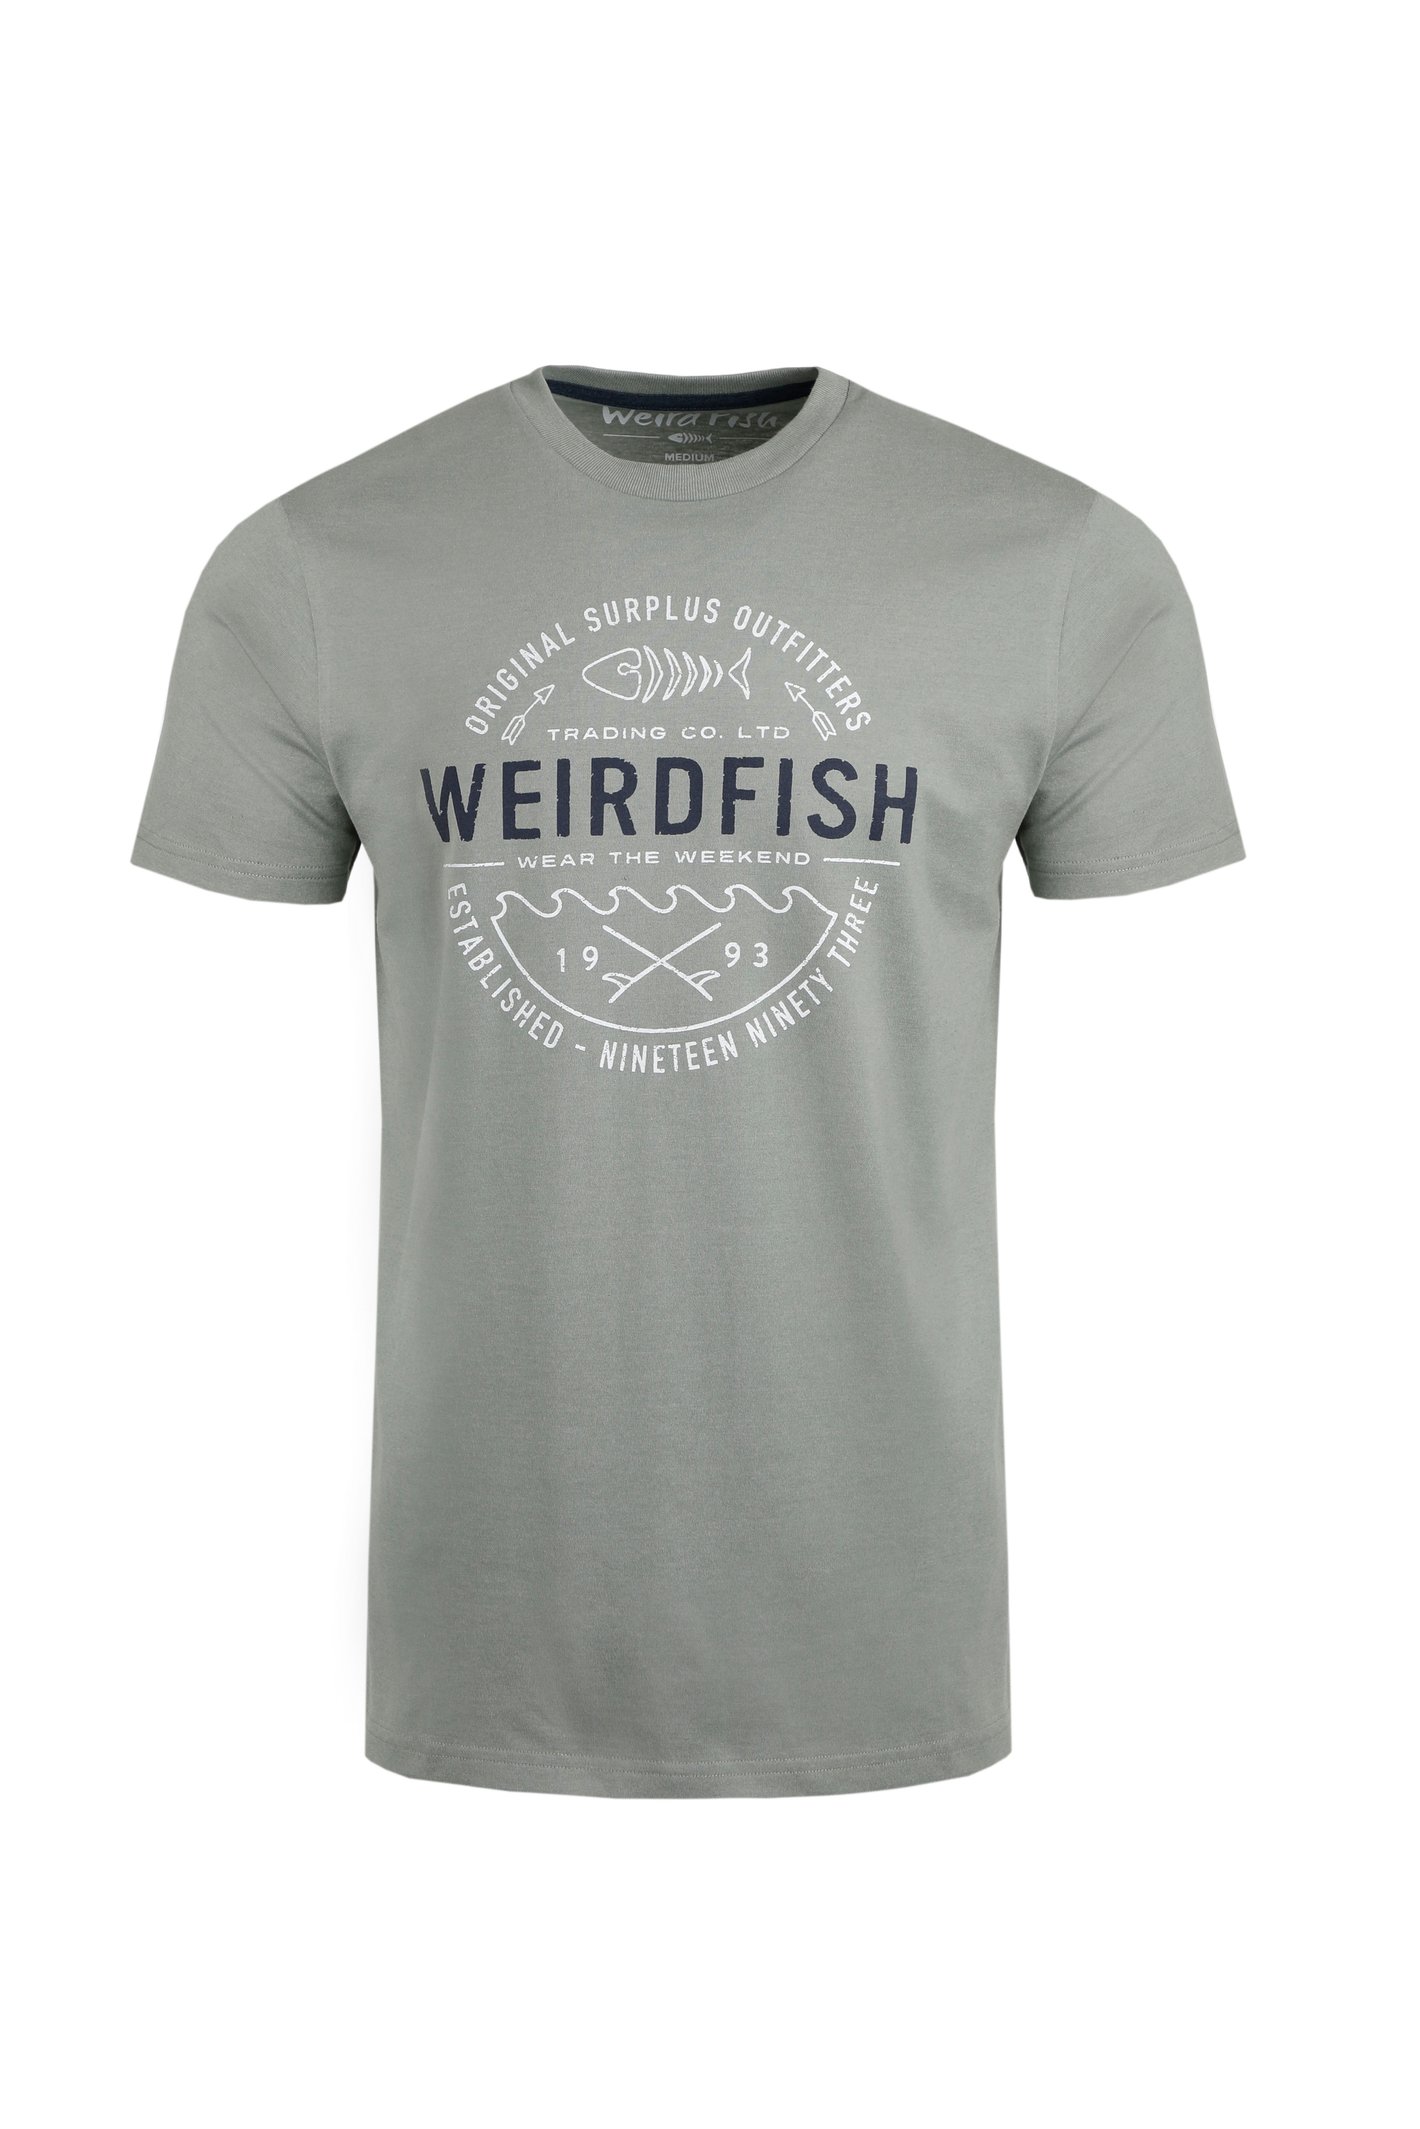 Weird Fish Waves Graphic T-Shirt Shadow Size 4Xl